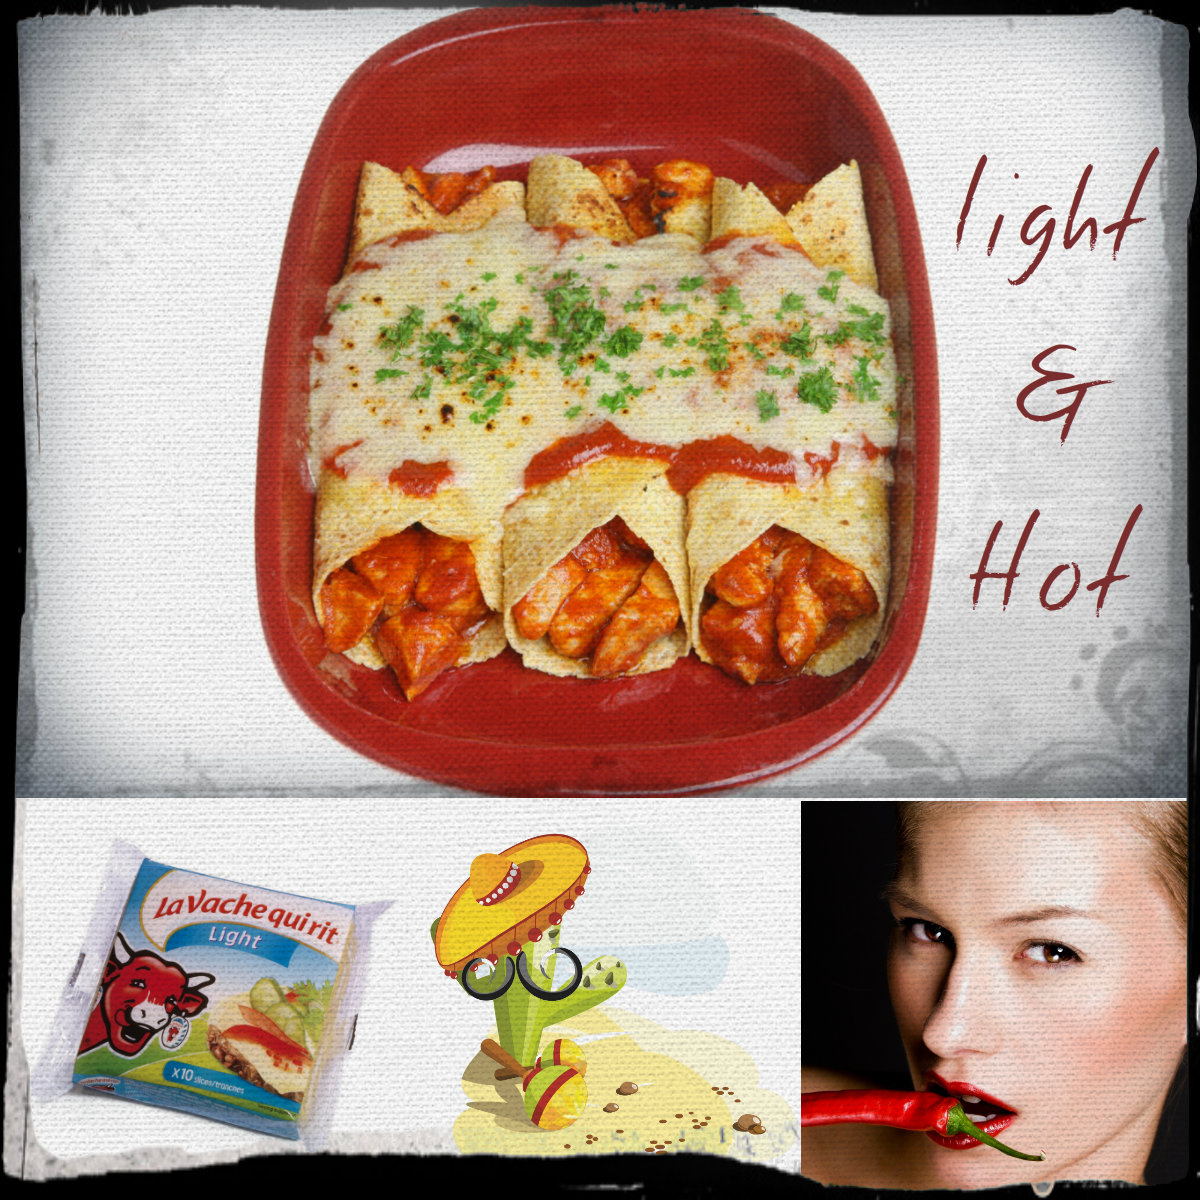 Chicken Enchiladas με La Vache qui Rit® Light